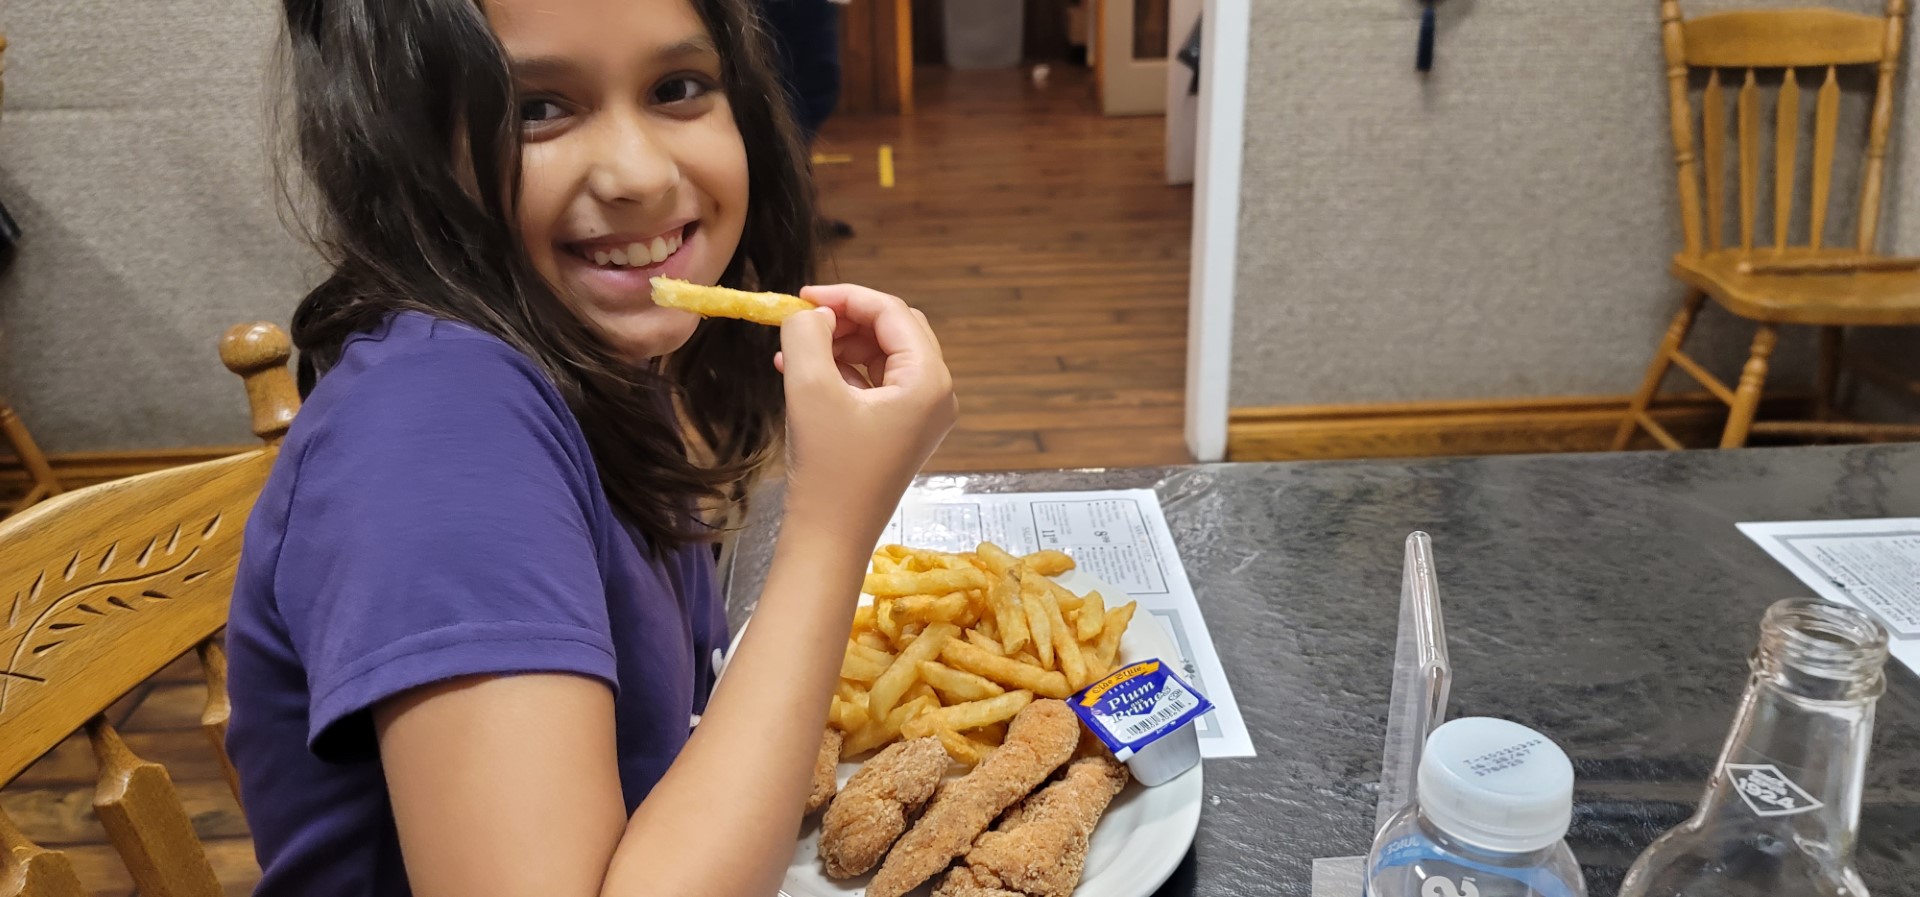 child eating fries smiling at camera